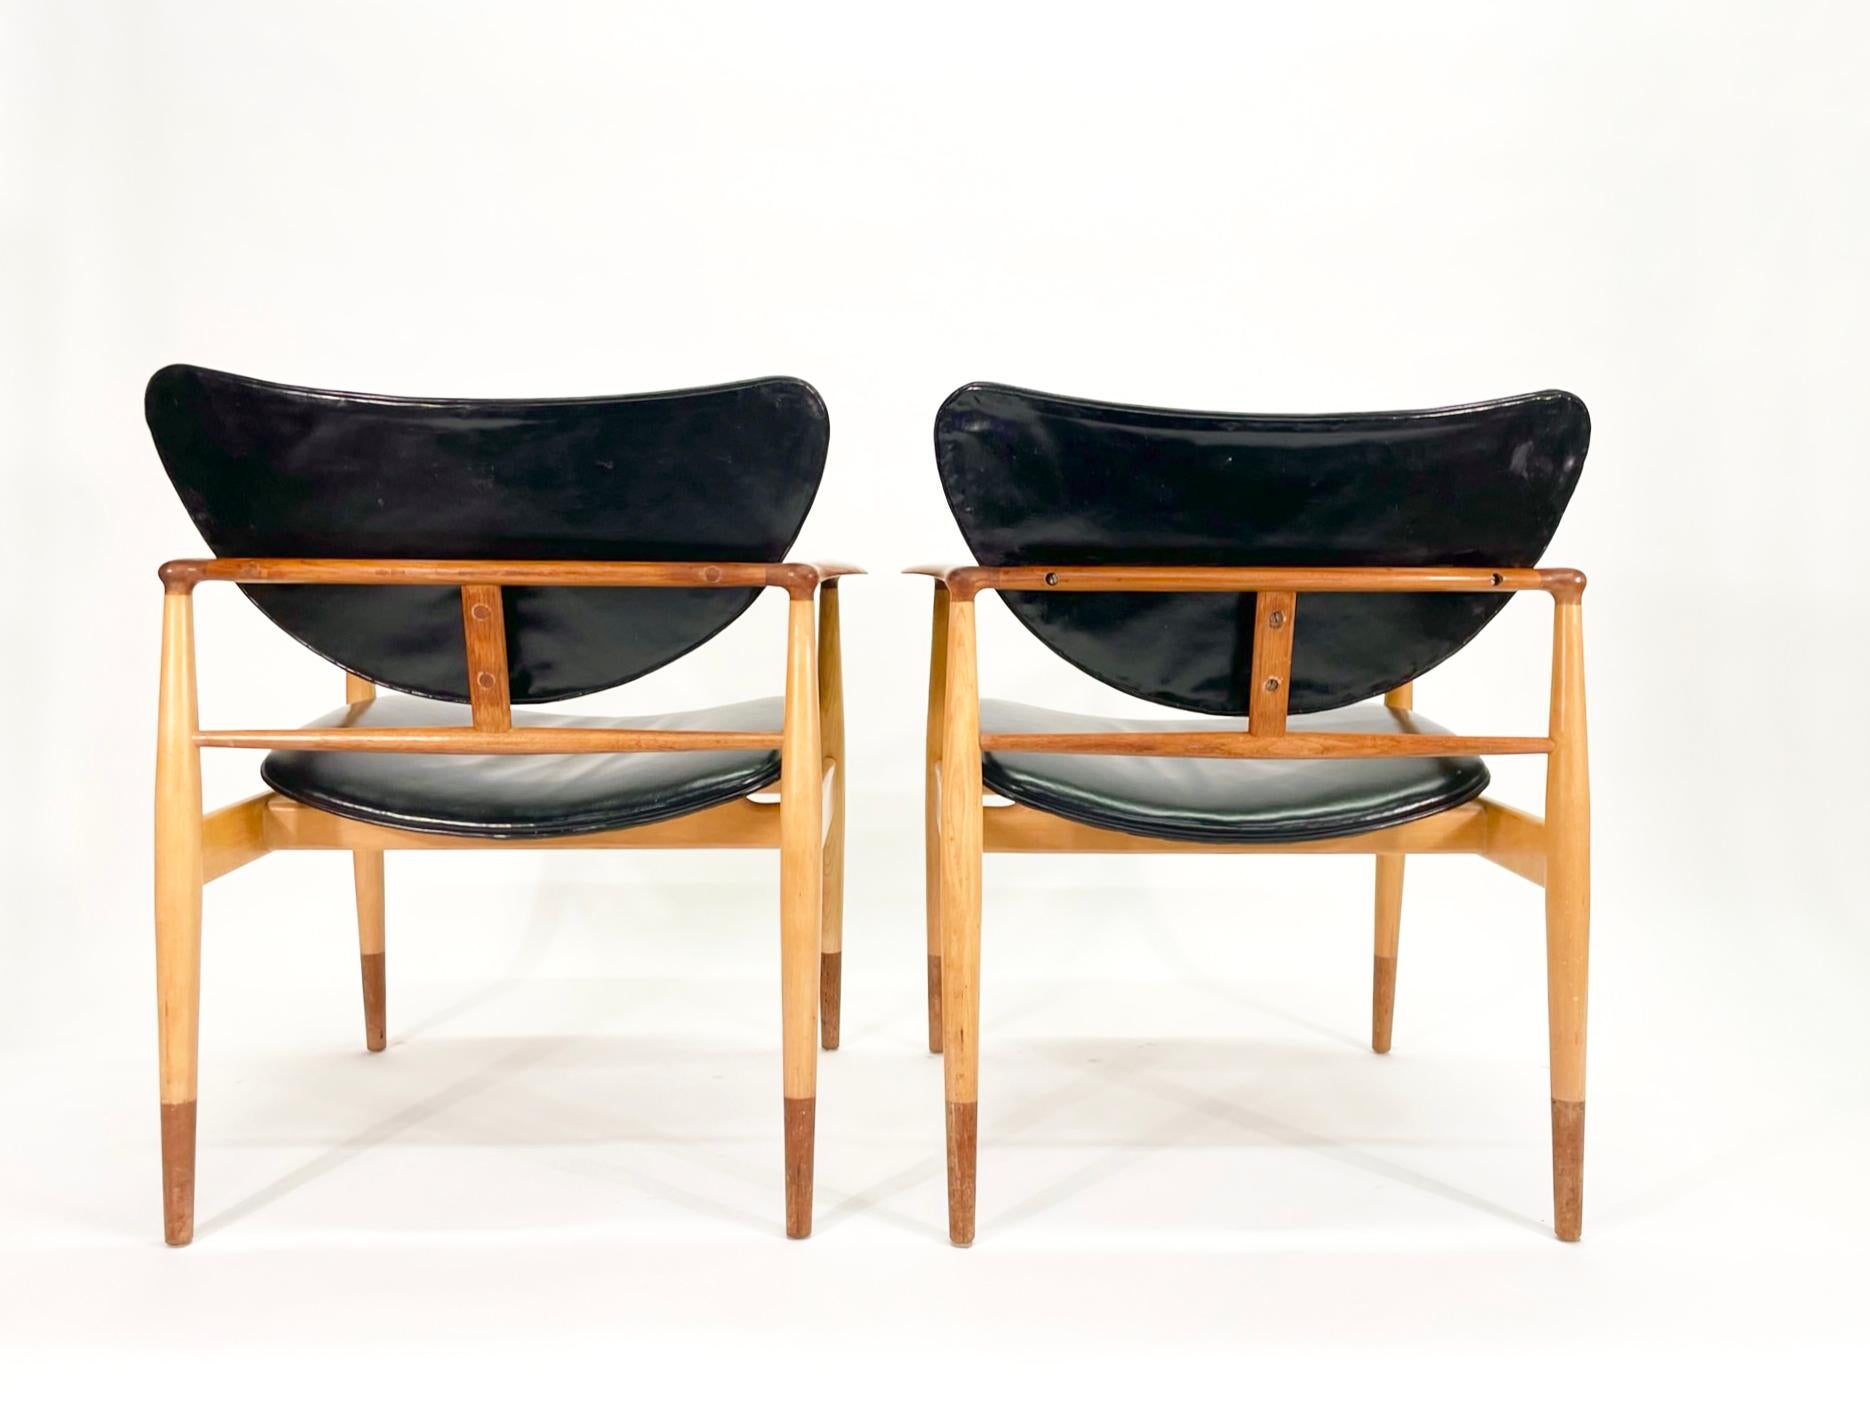 Mid-Century Modern Finn Juhl Model 48 Chair by Baker, in Teak and Maple (2 available)